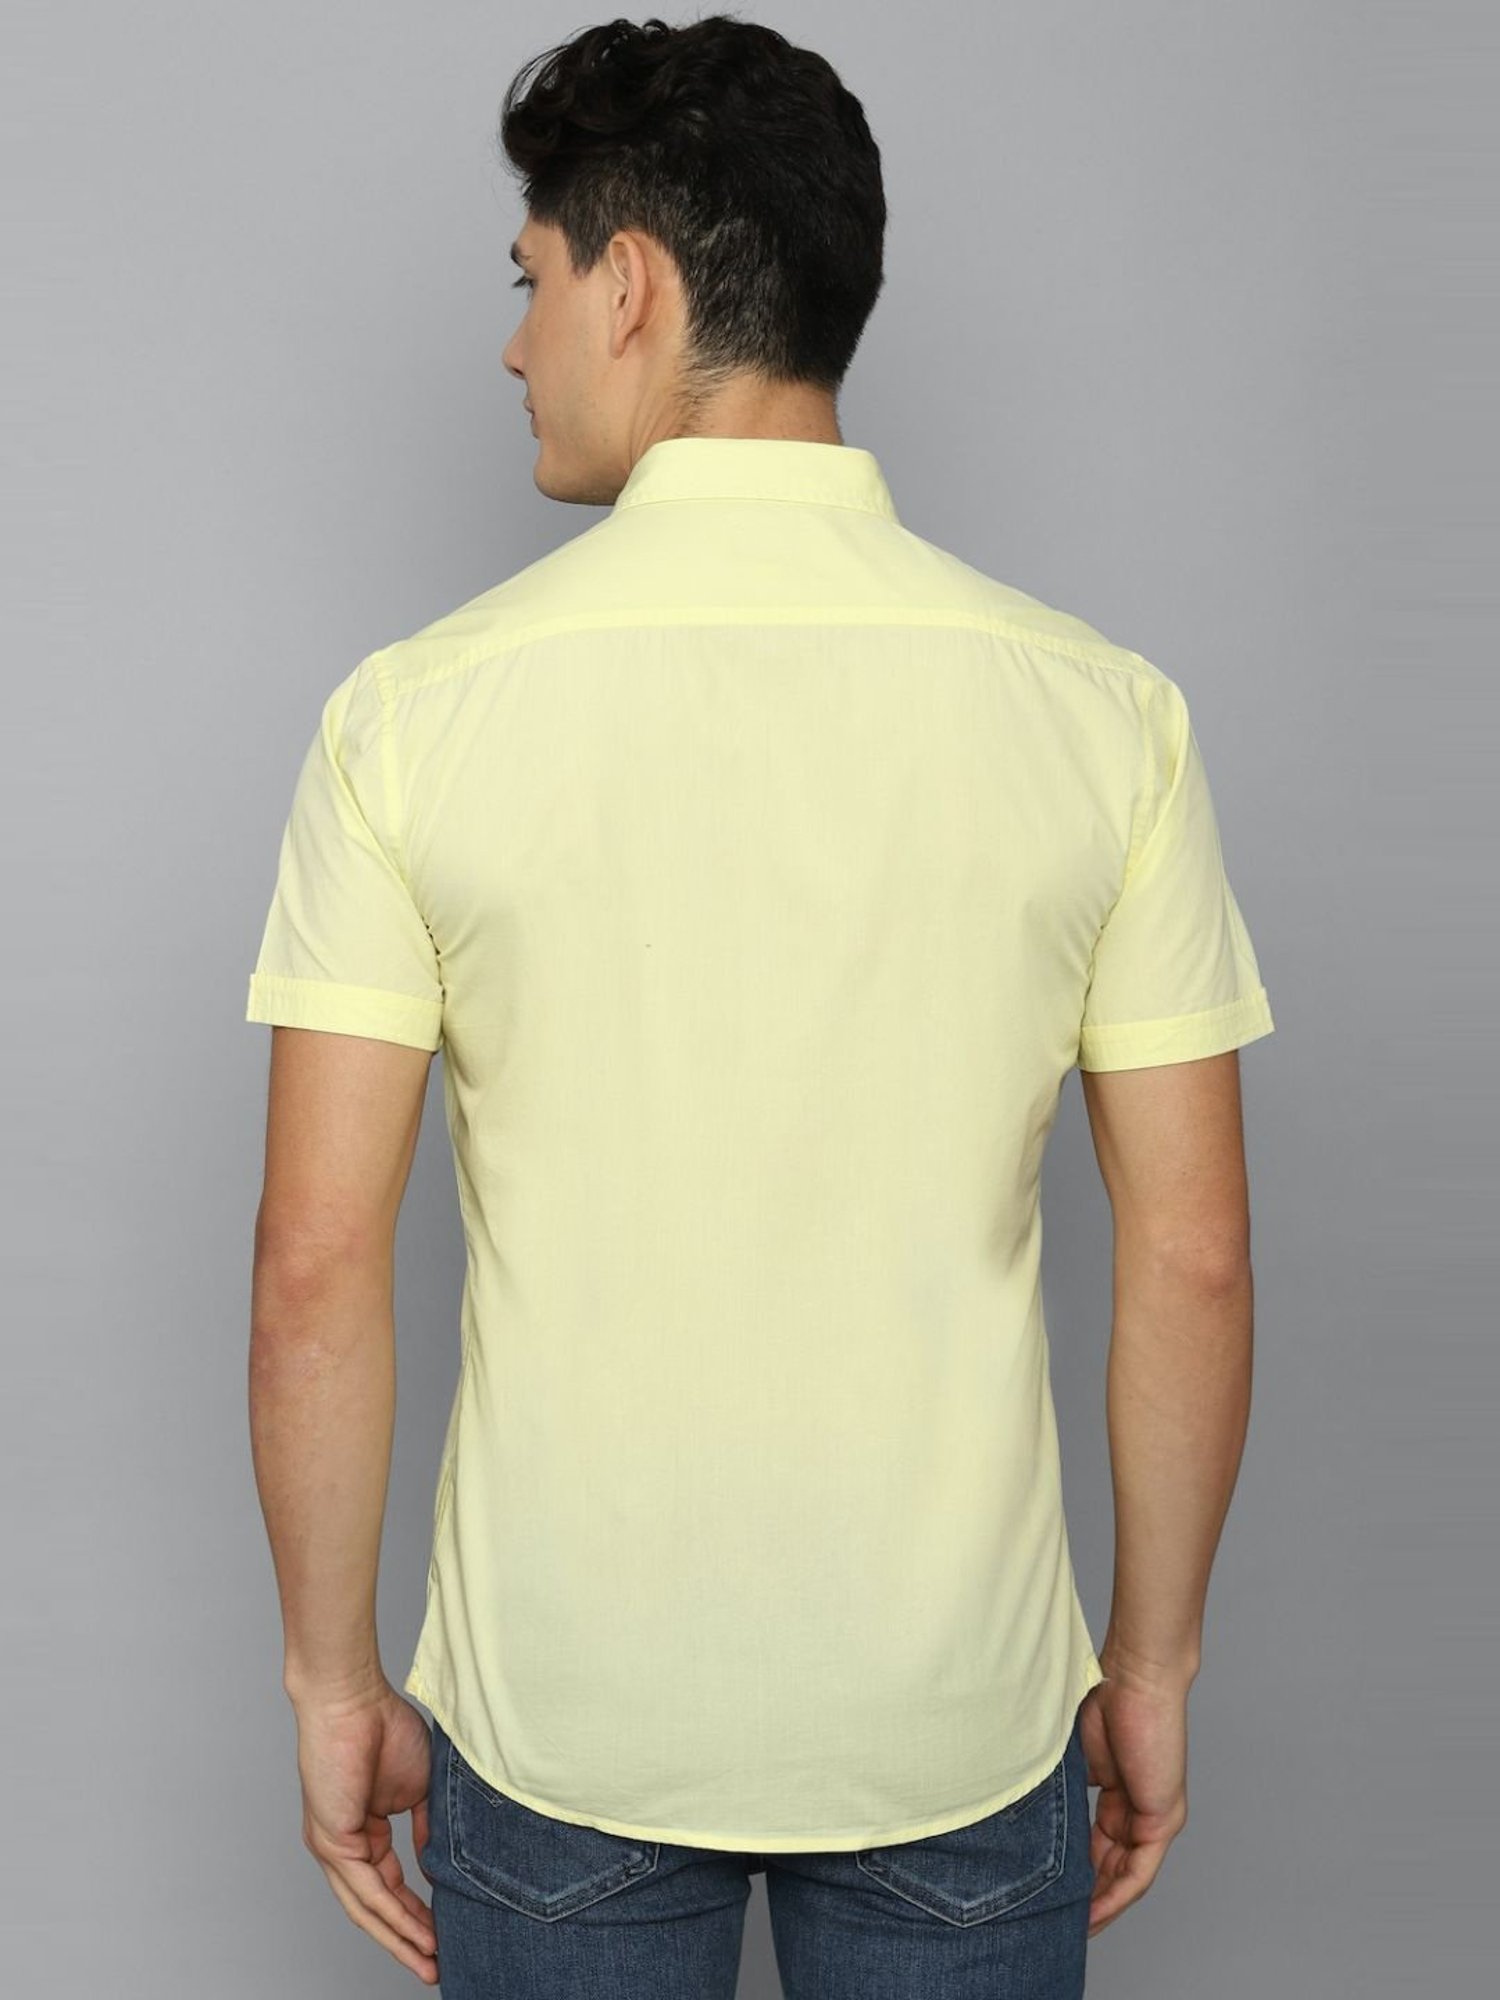 VOI JEANS Men Solid Casual Yellow Shirt - Buy VOI JEANS Men Solid Casual Yellow  Shirt Online at Best Prices in India | Flipkart.com